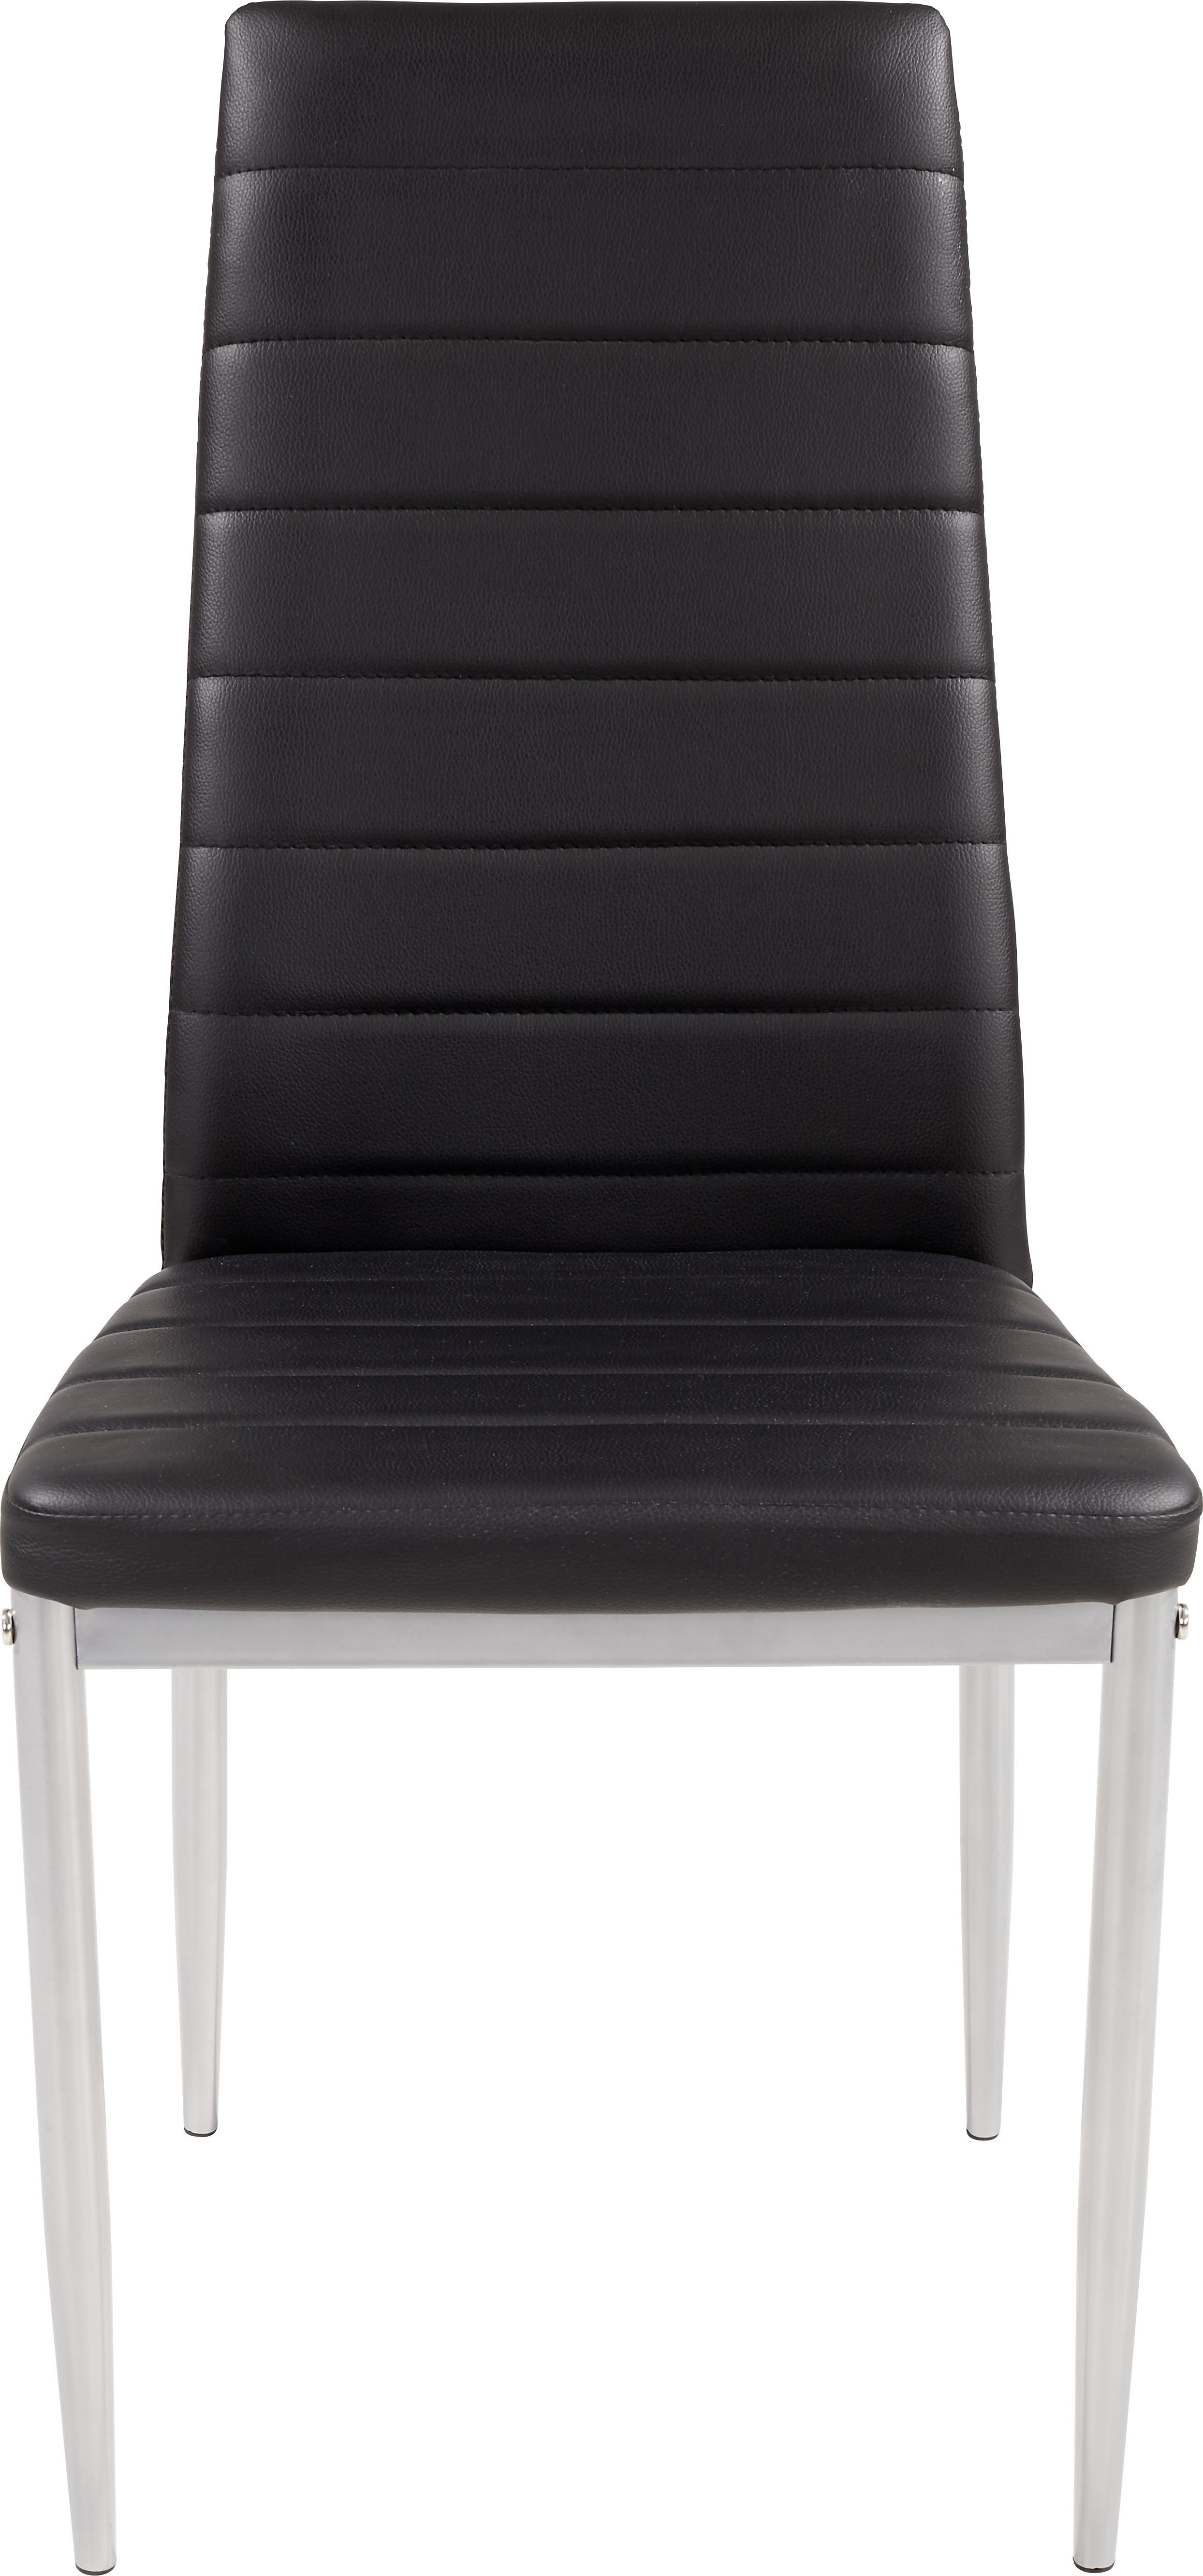 Židle Franzi    *cenový Trhák* - černá/barvy hliníku, Konvenční, kov/textil (42/97/53cm)